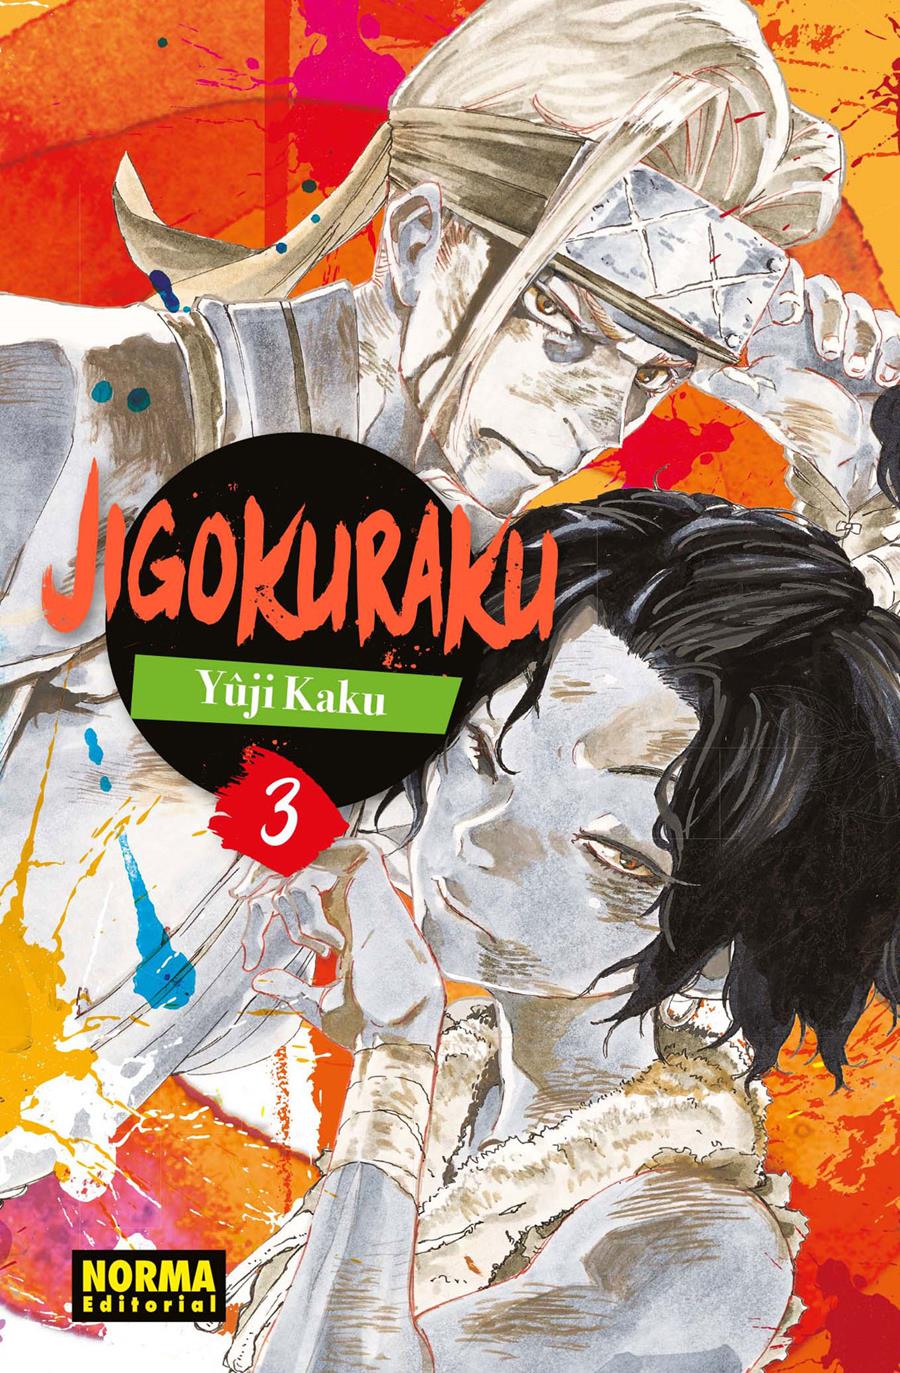 Jigokuraku 03 | N1020-NOR43 | Yuji Kaku | Terra de Còmic - Tu tienda de cómics online especializada en cómics, manga y merchandising